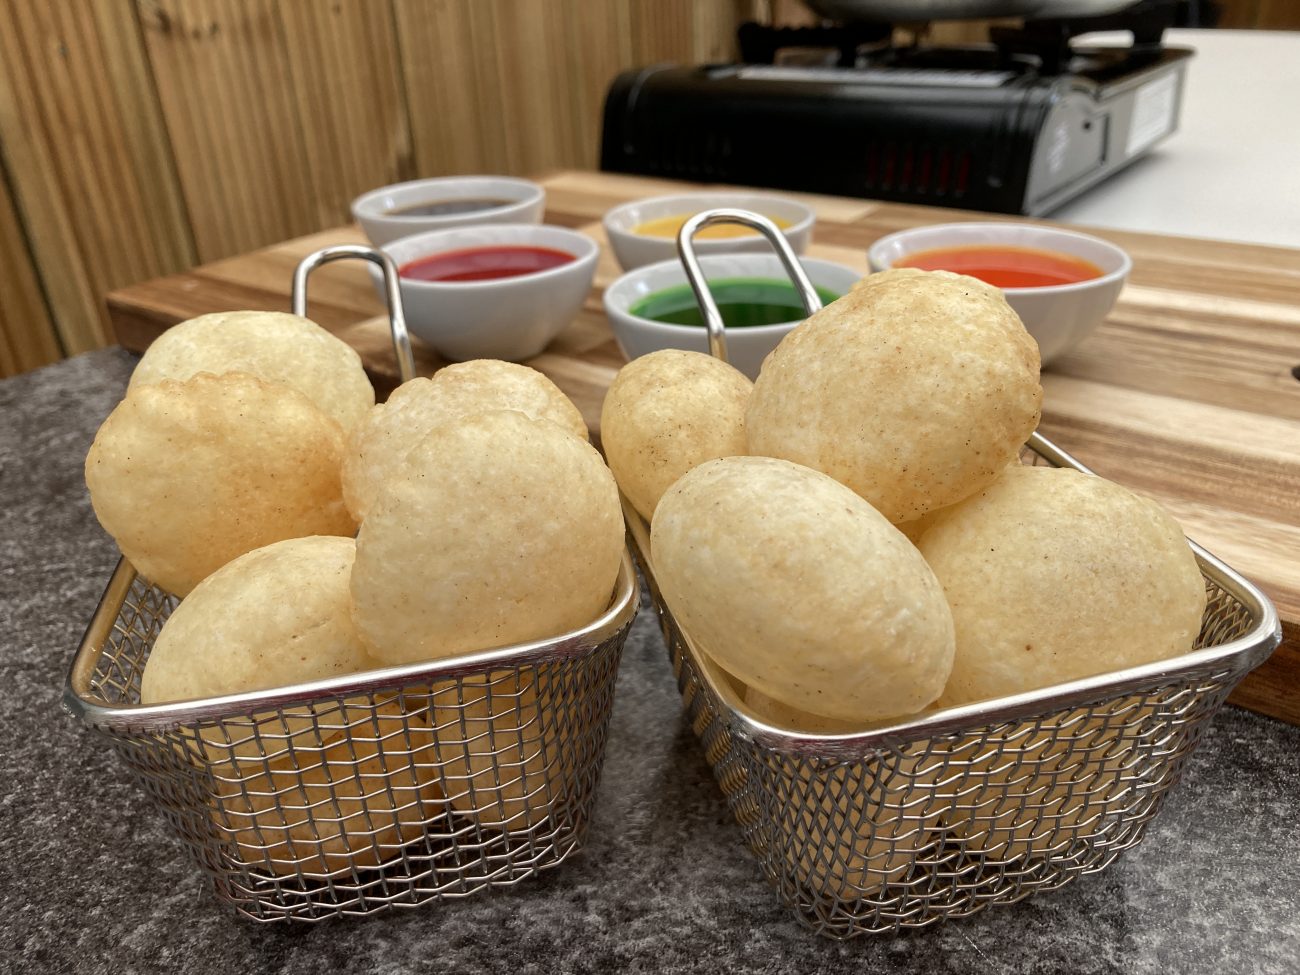 Puri, Puris or Poori – Indian crispy deep-fried breads